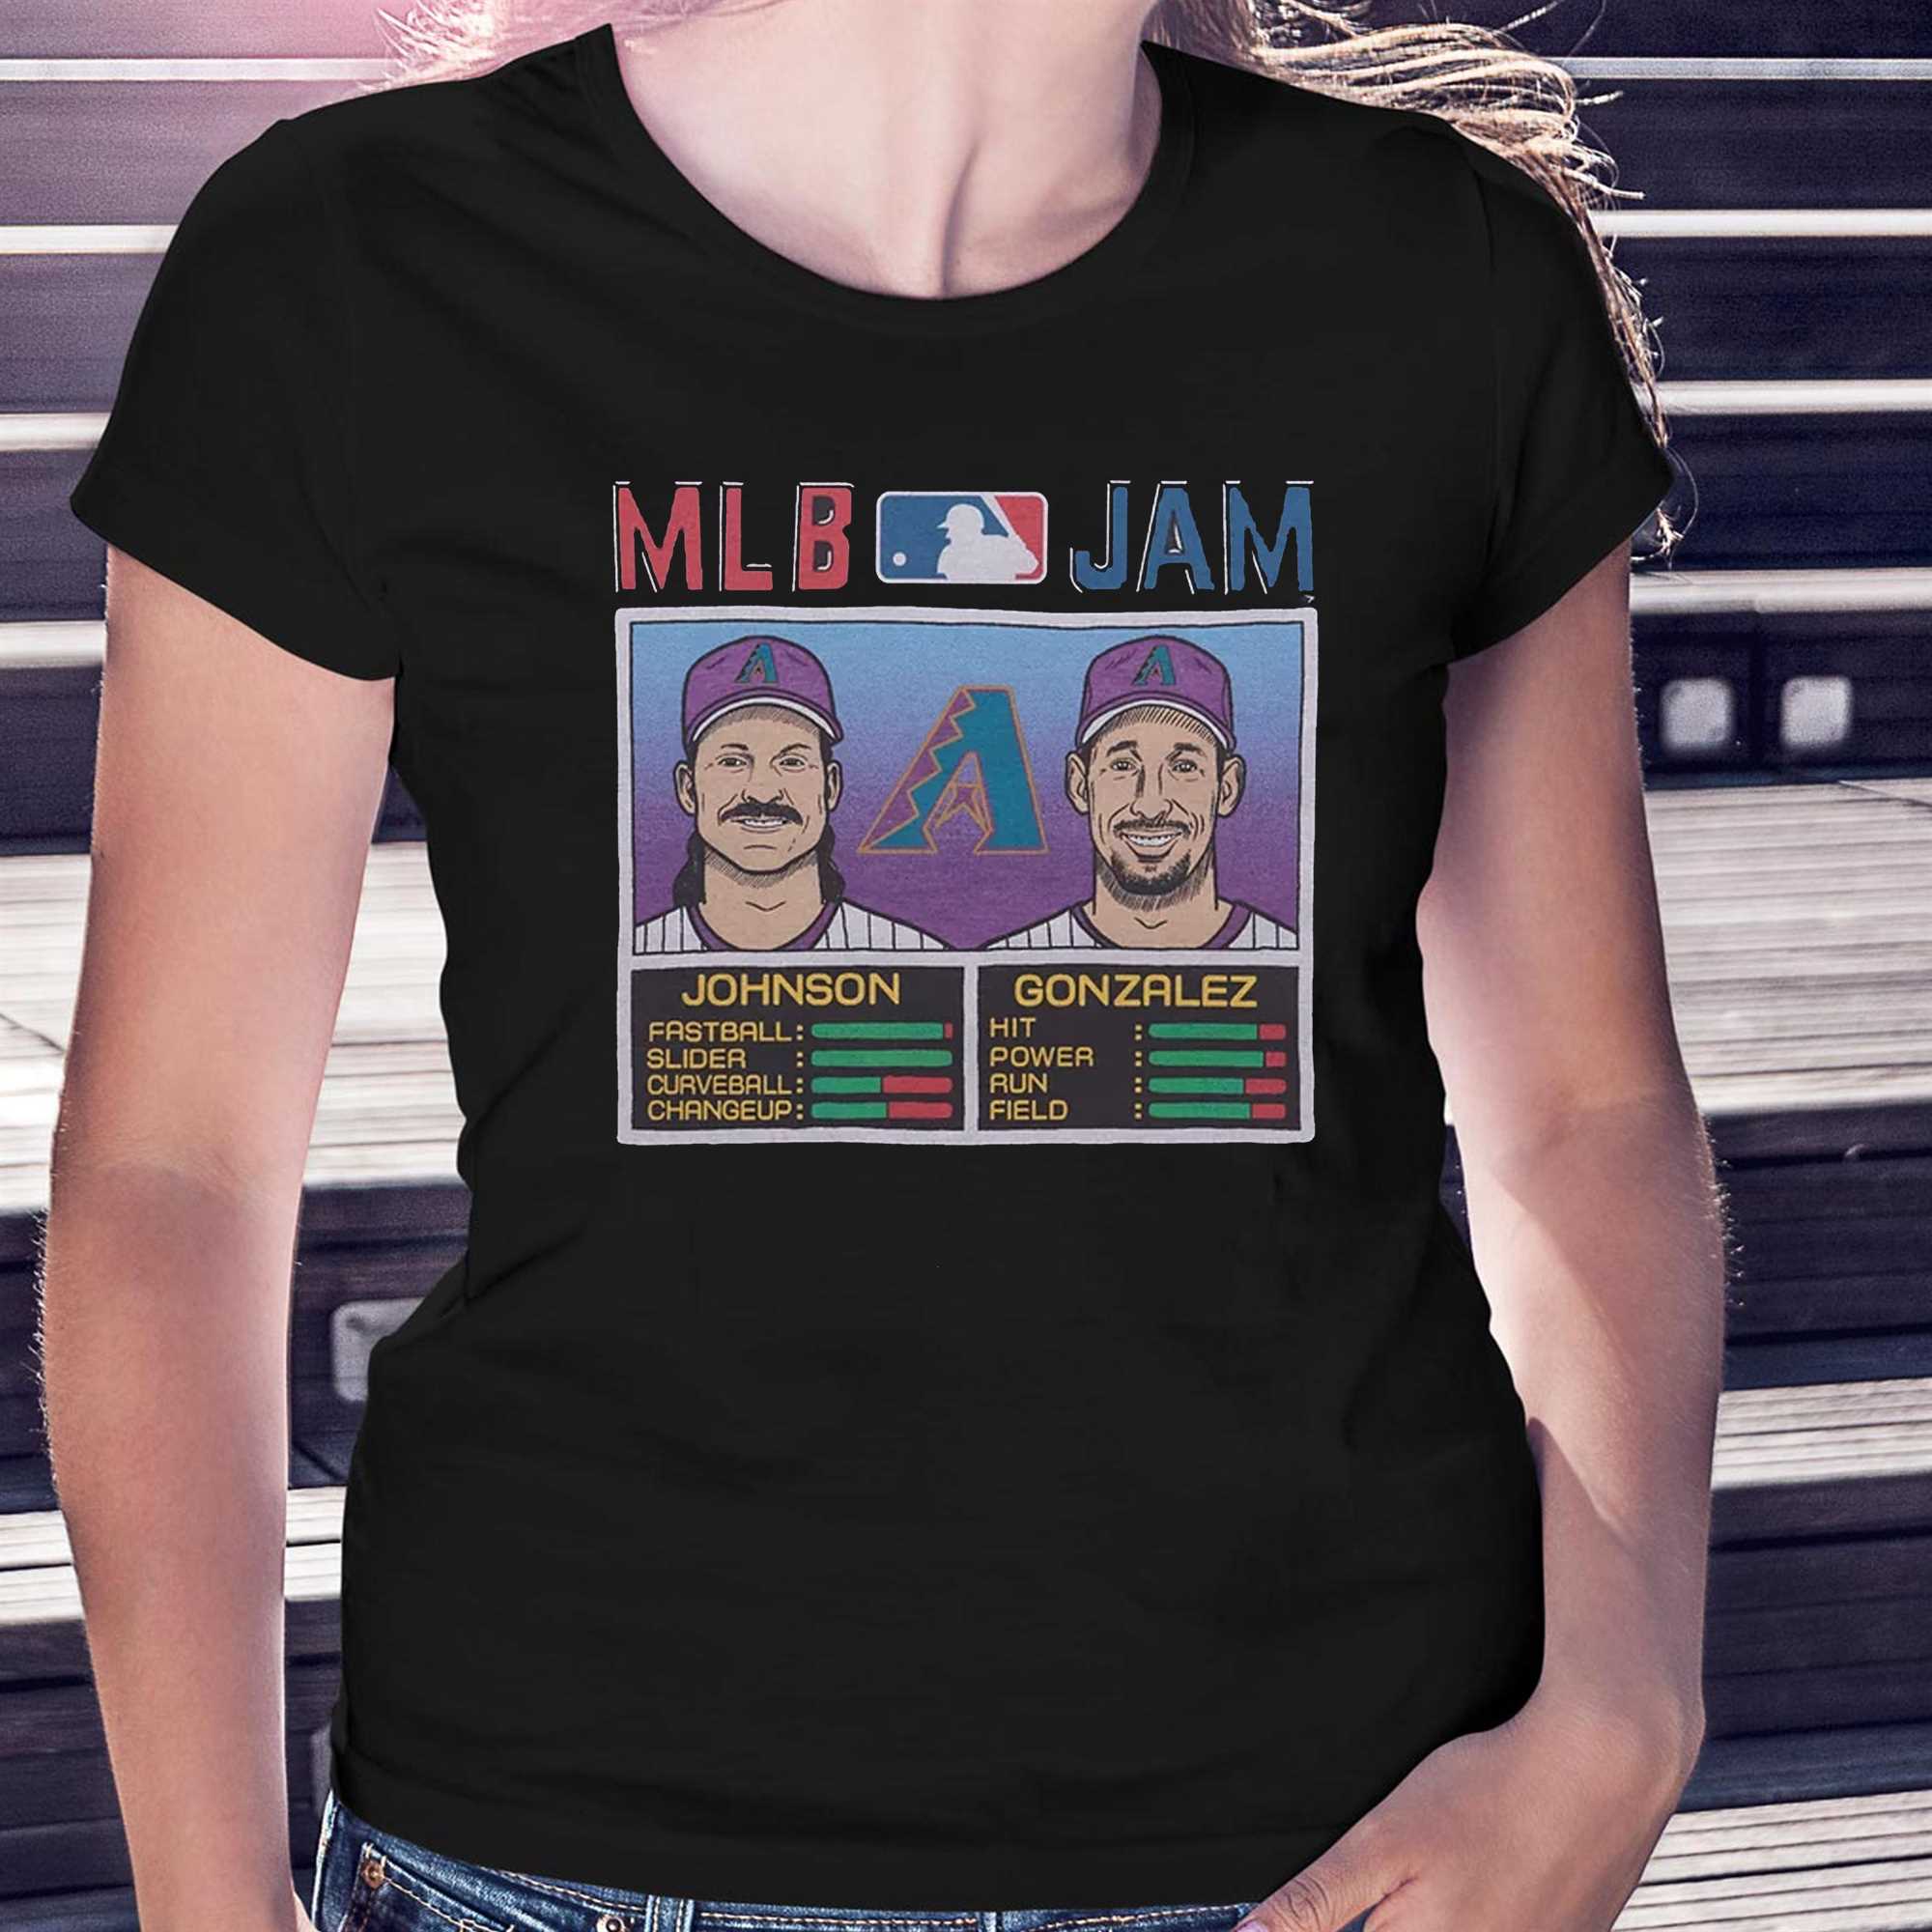 Mlb Jam Diamondbacks Johnson And Gonzalez Shirt - Shibtee Clothing